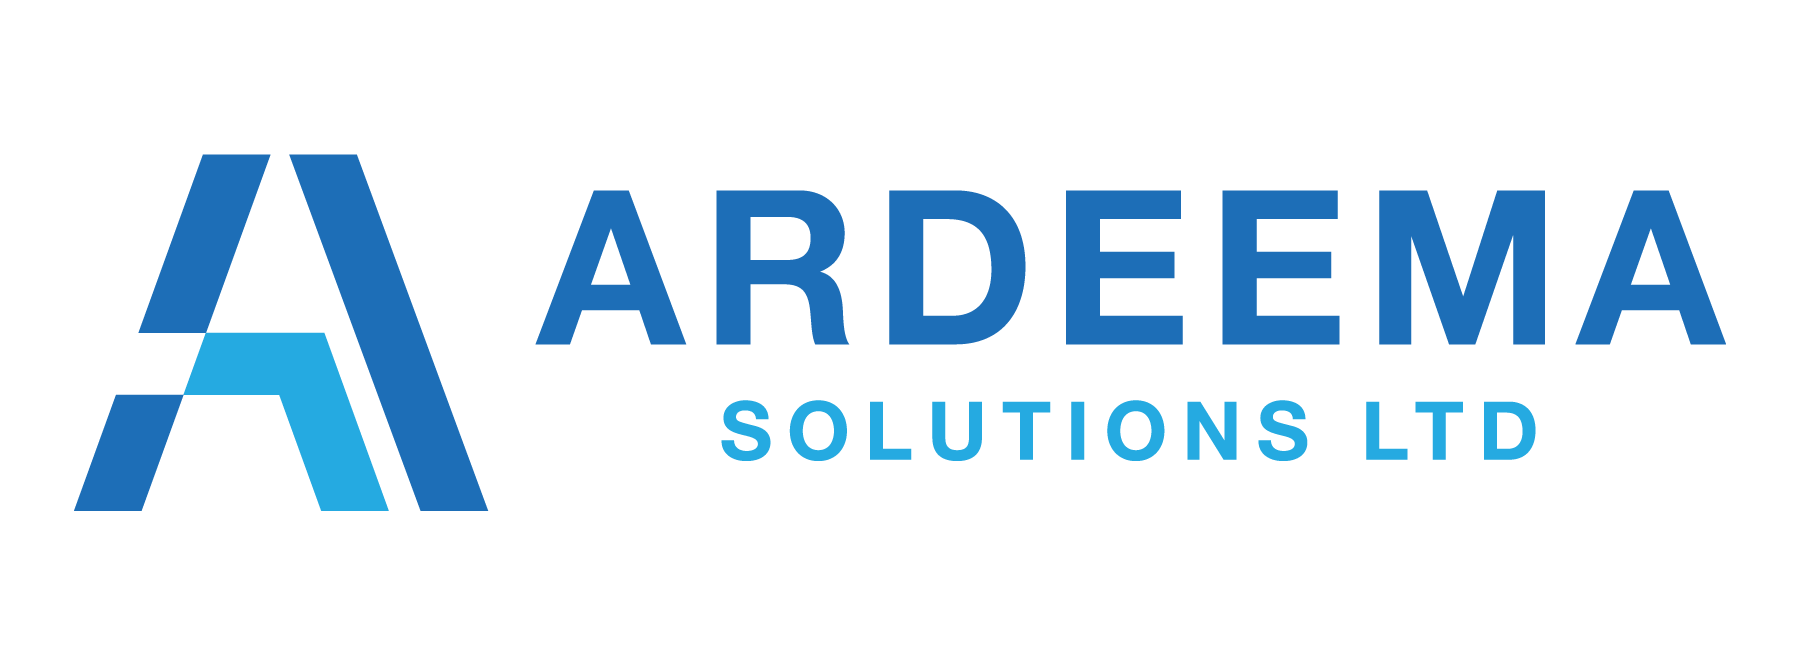 ardeema solutions original logo